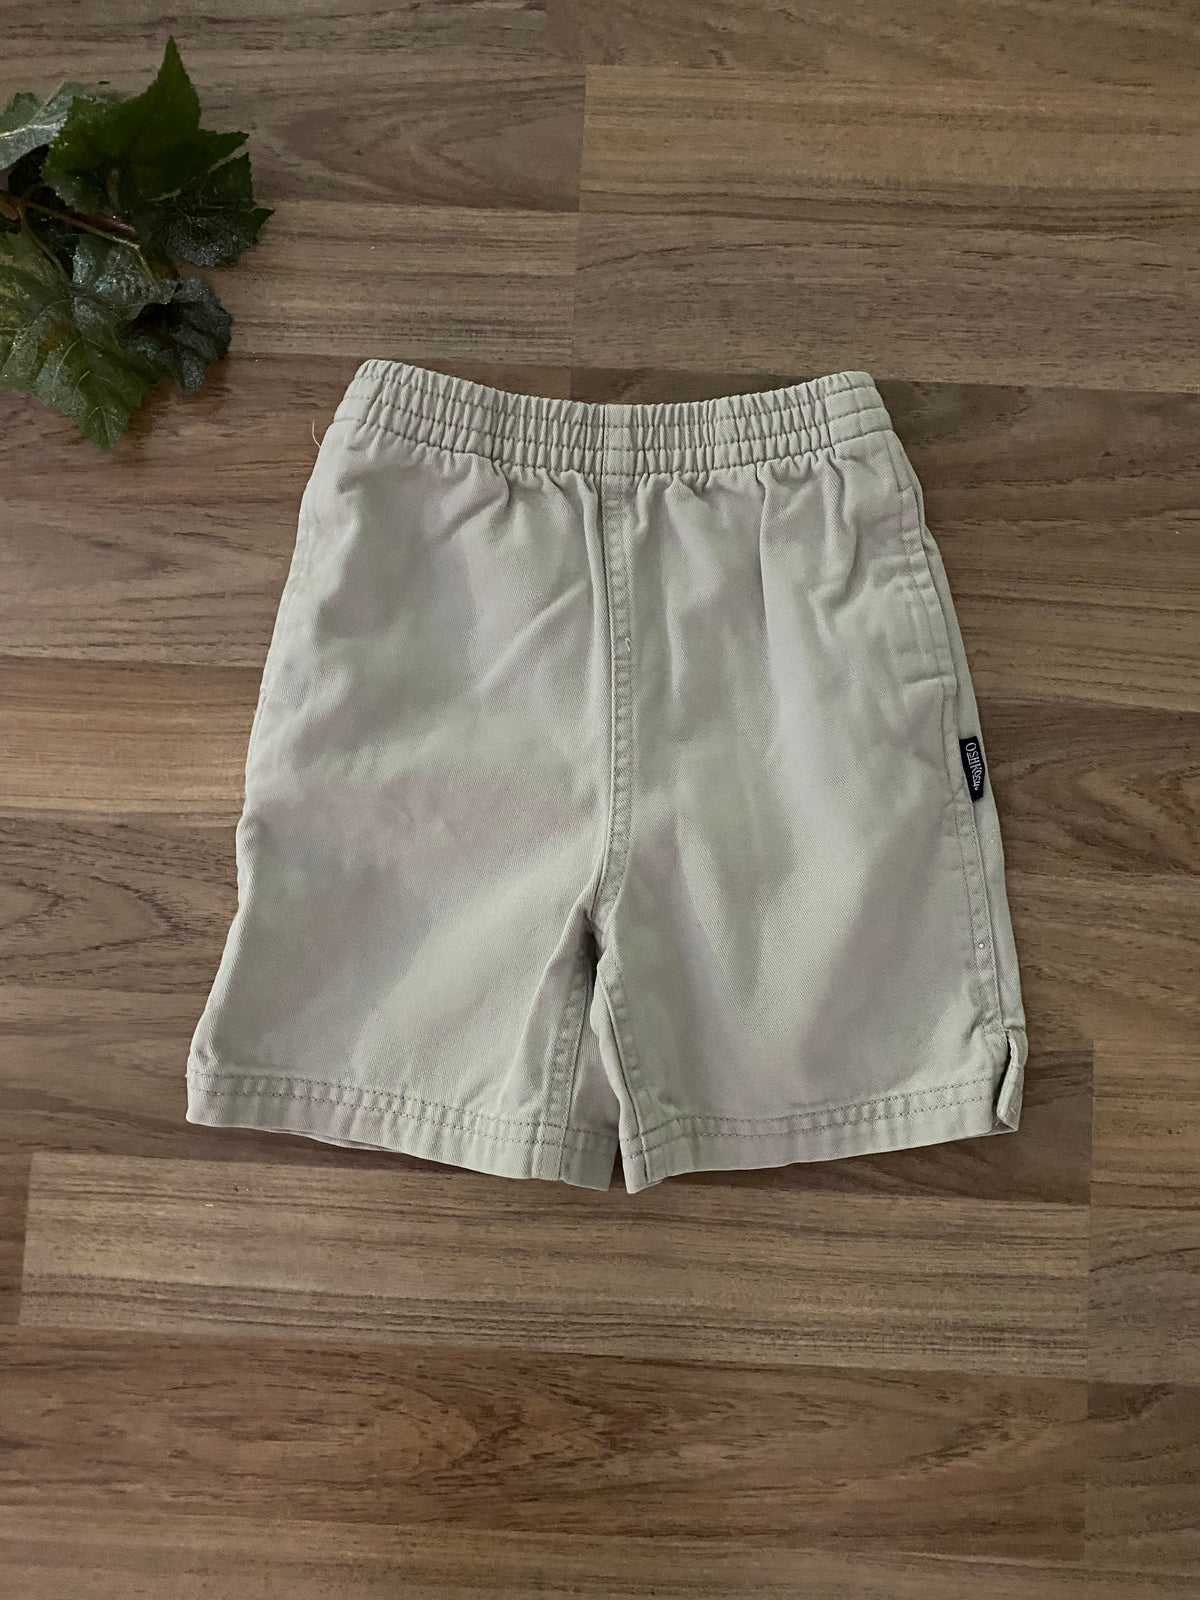 Shorts (Boys Size 18M)